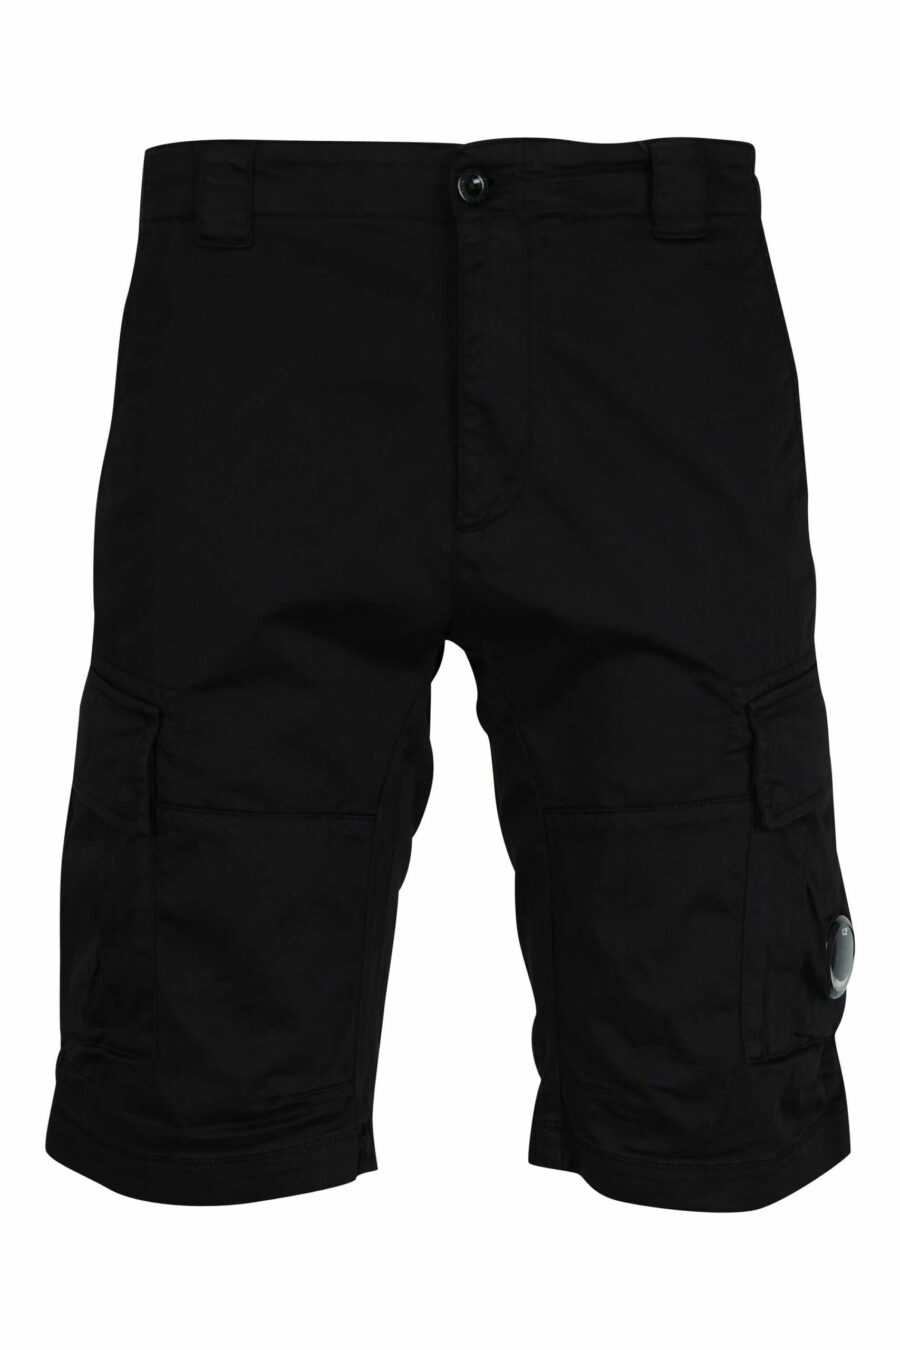 Schwarze Cargo-Shorts mit Mini-Logo-Linse - 7620943698381 skaliert